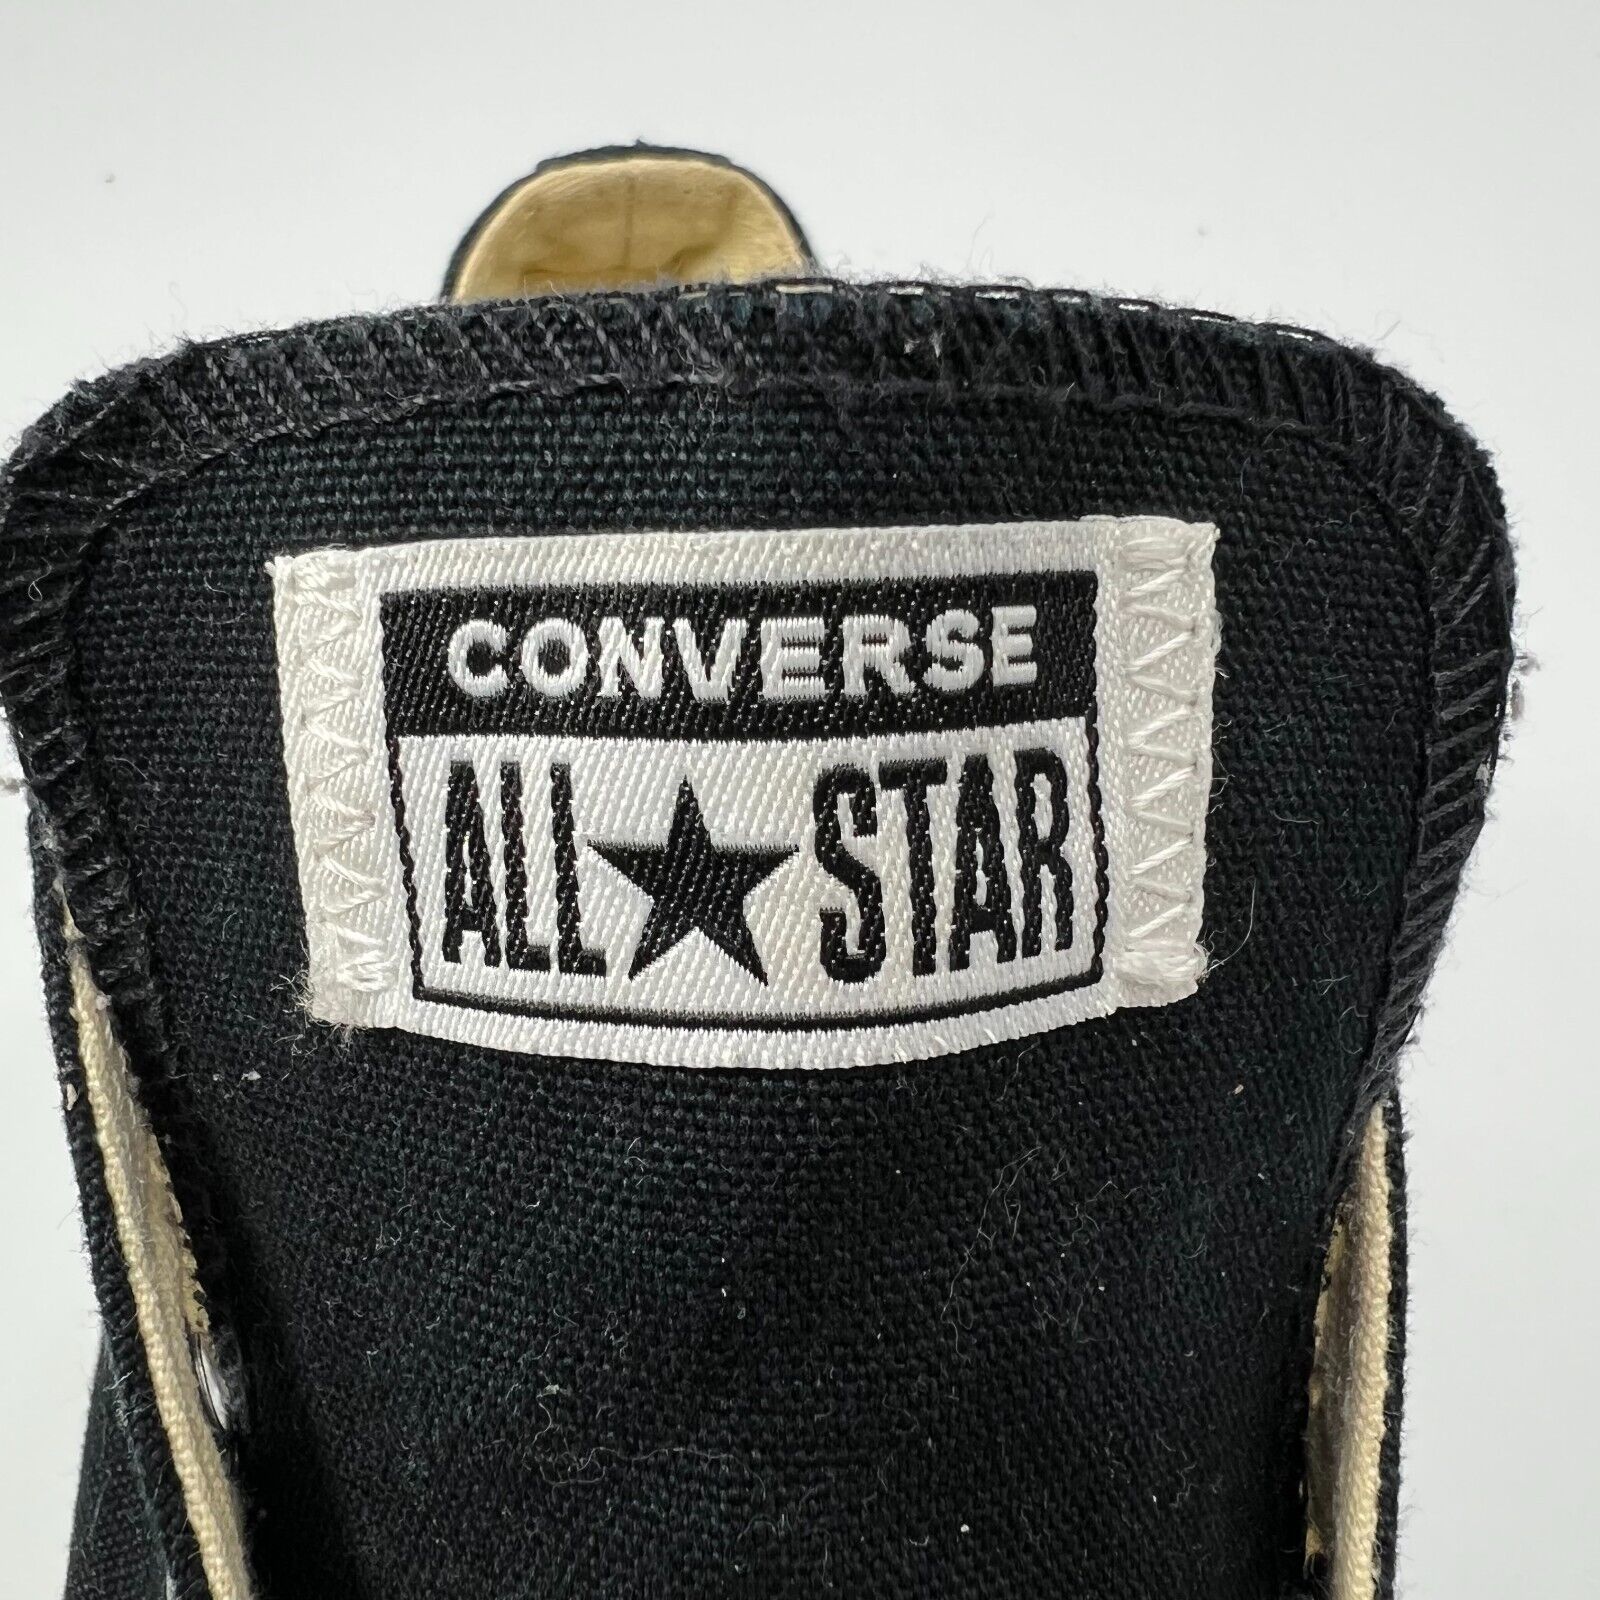 CONVERSE All-Star Canvas Black Low Cut Skate Shoes US Size Men 8.5 Women 10.5